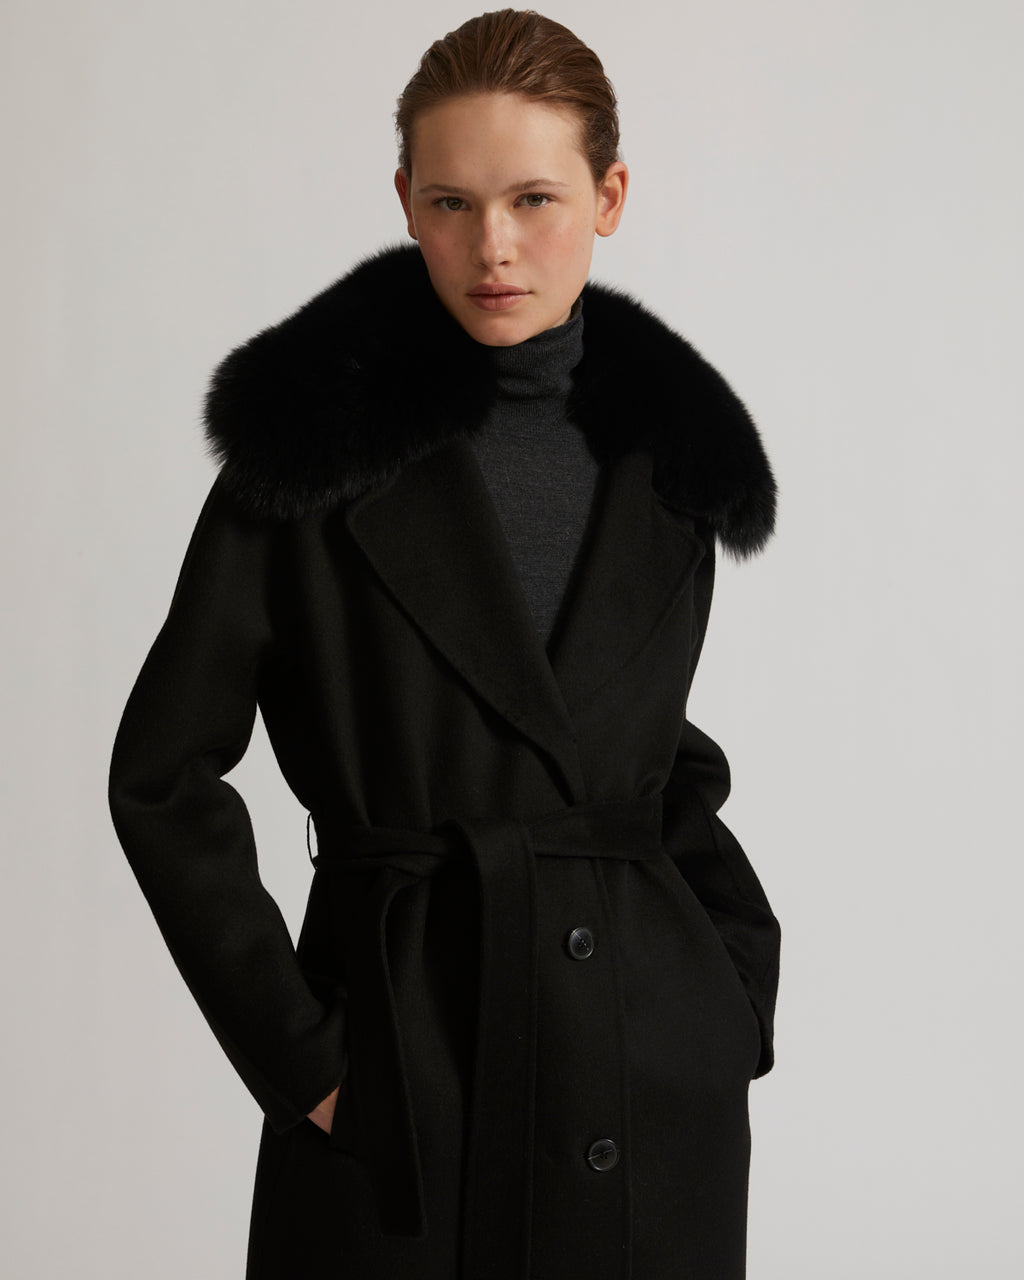 Essential Sophistication Black Faux Fur Collar Belted Coat